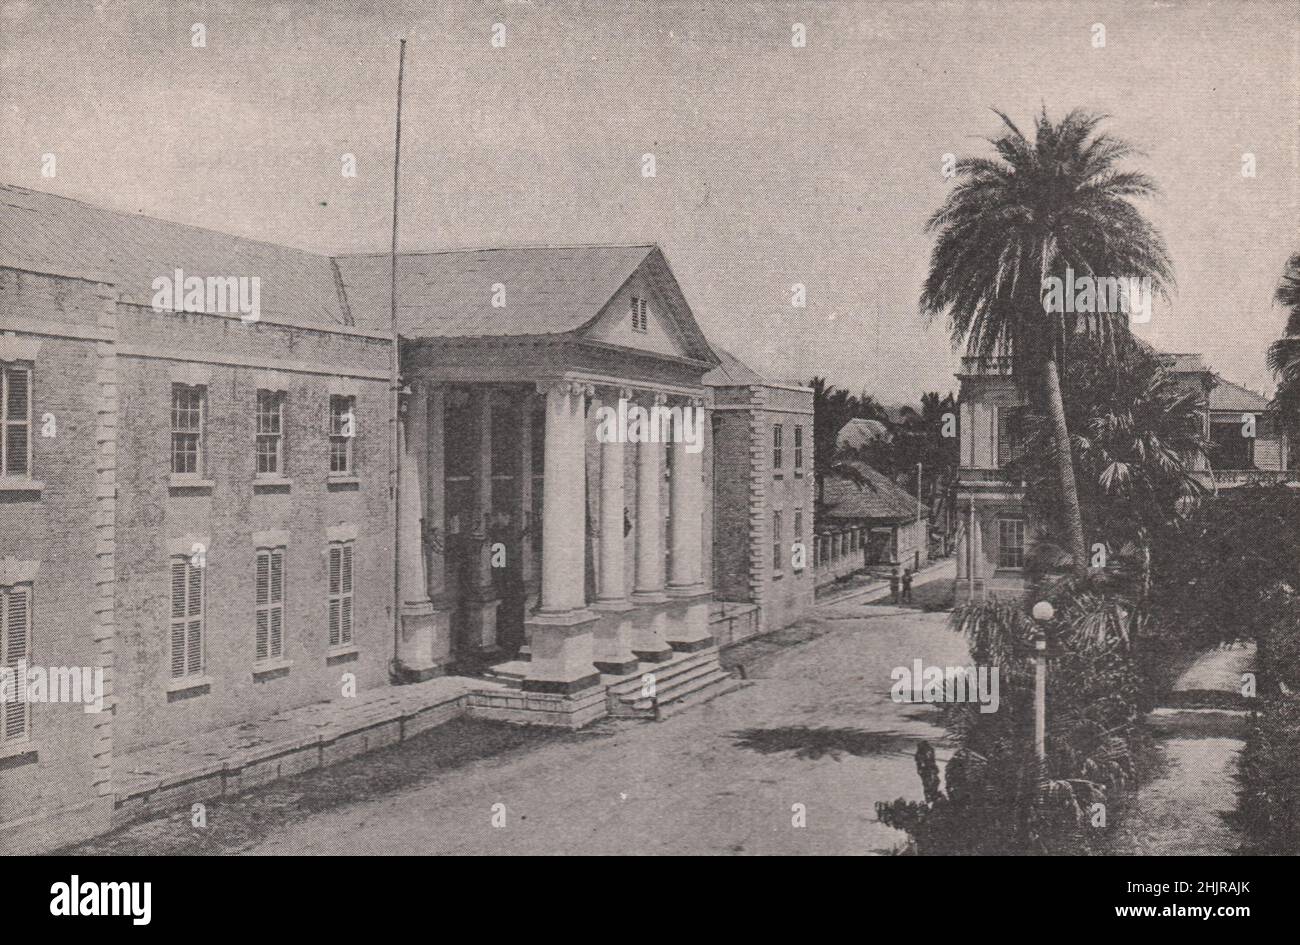 King's house at Spanish town, Jamaica's former capital. Jamaica  (1923) Stock Photo